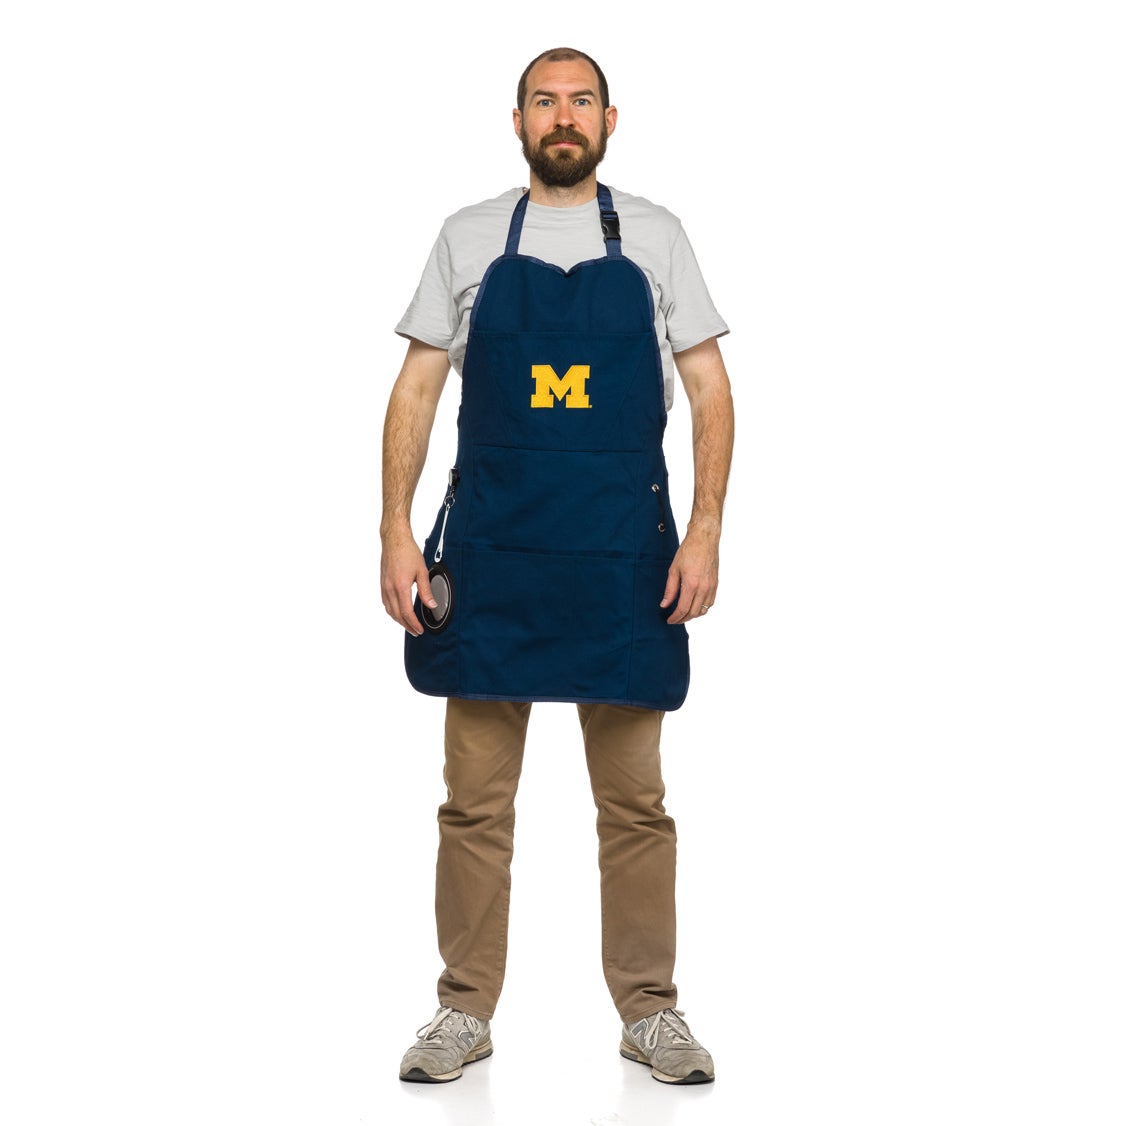 University of Michigan Wolverines Grilling Apron